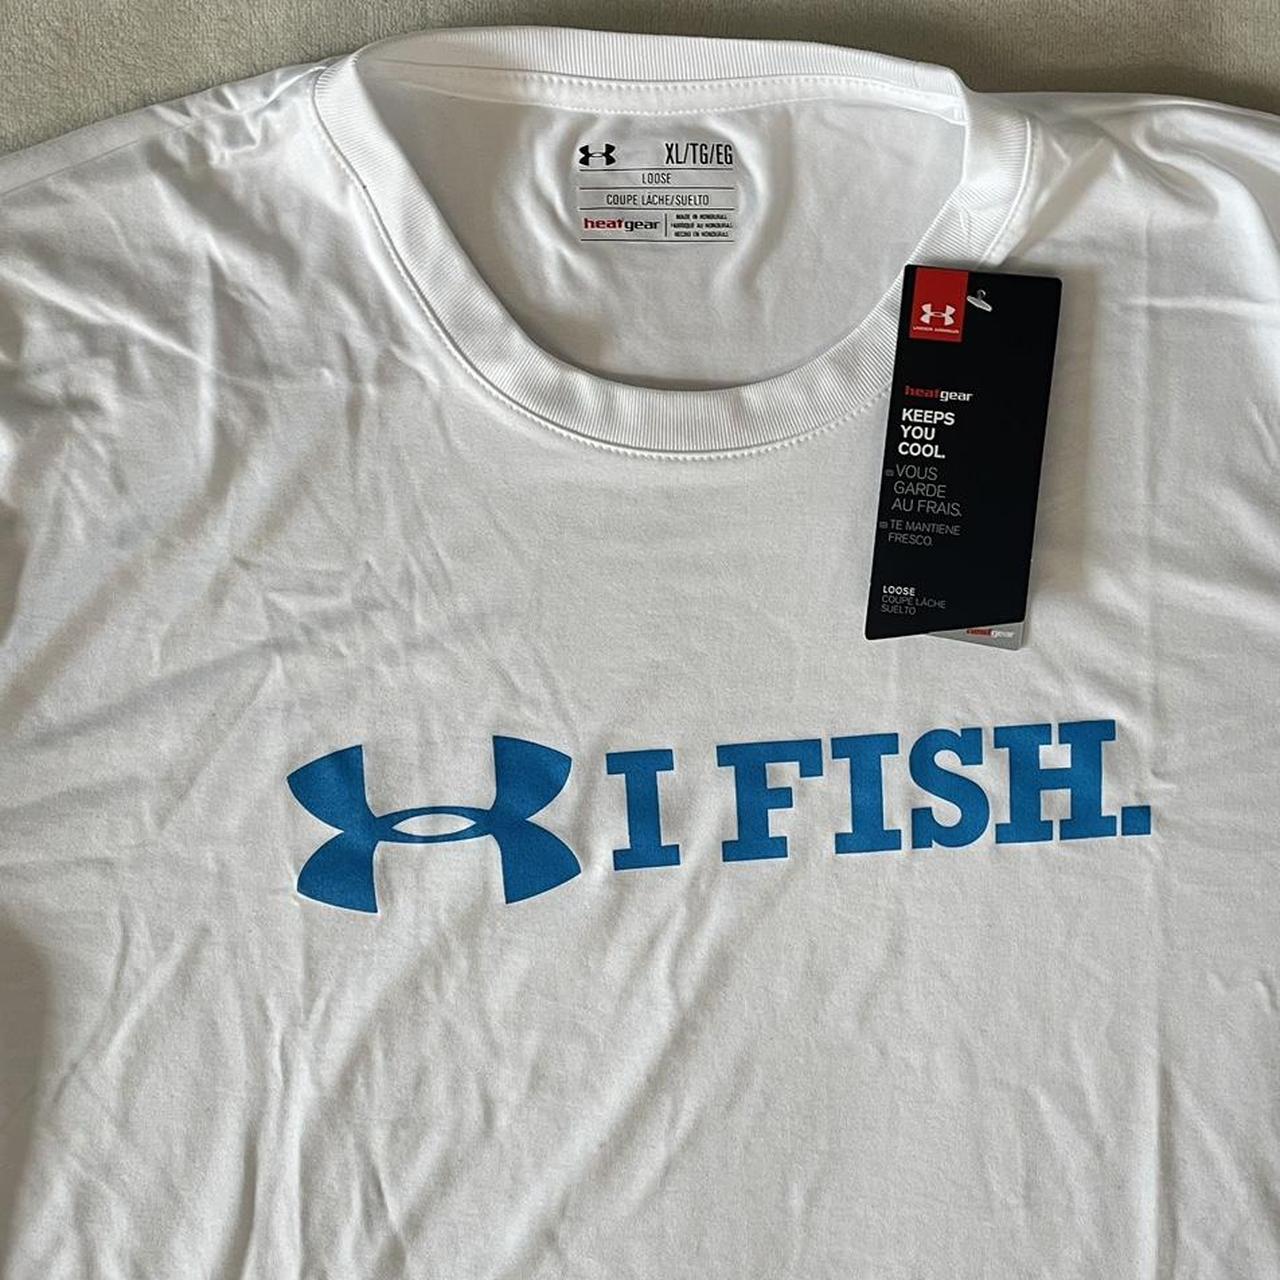 men's I FISH white & blue under armor t-shirt - Depop